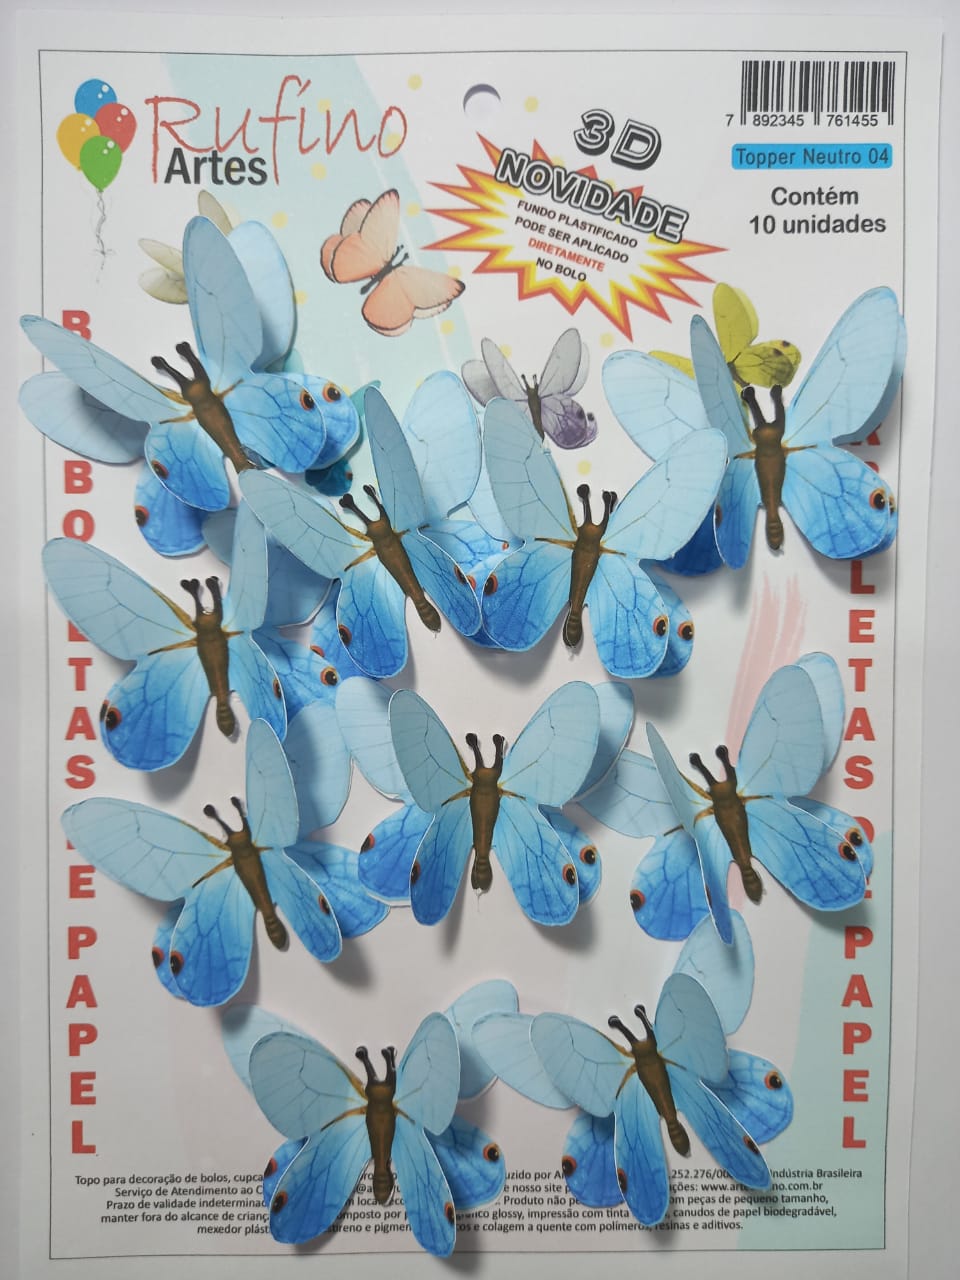 Topo de Bolo Borboleta Azul / Artes Rufino ®